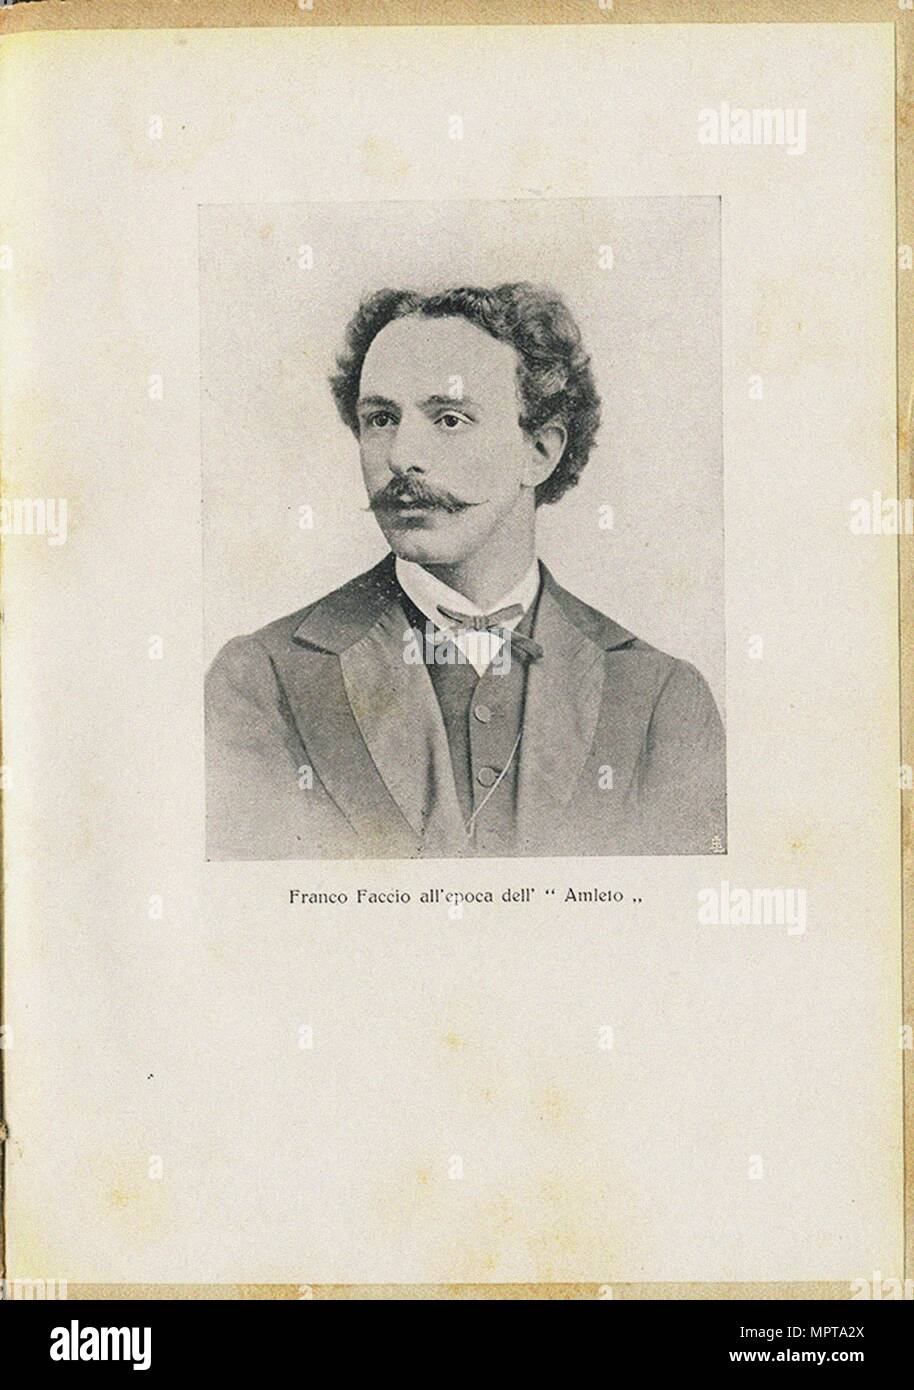 Franco Faccio during the time of Amleto. Stock Photo